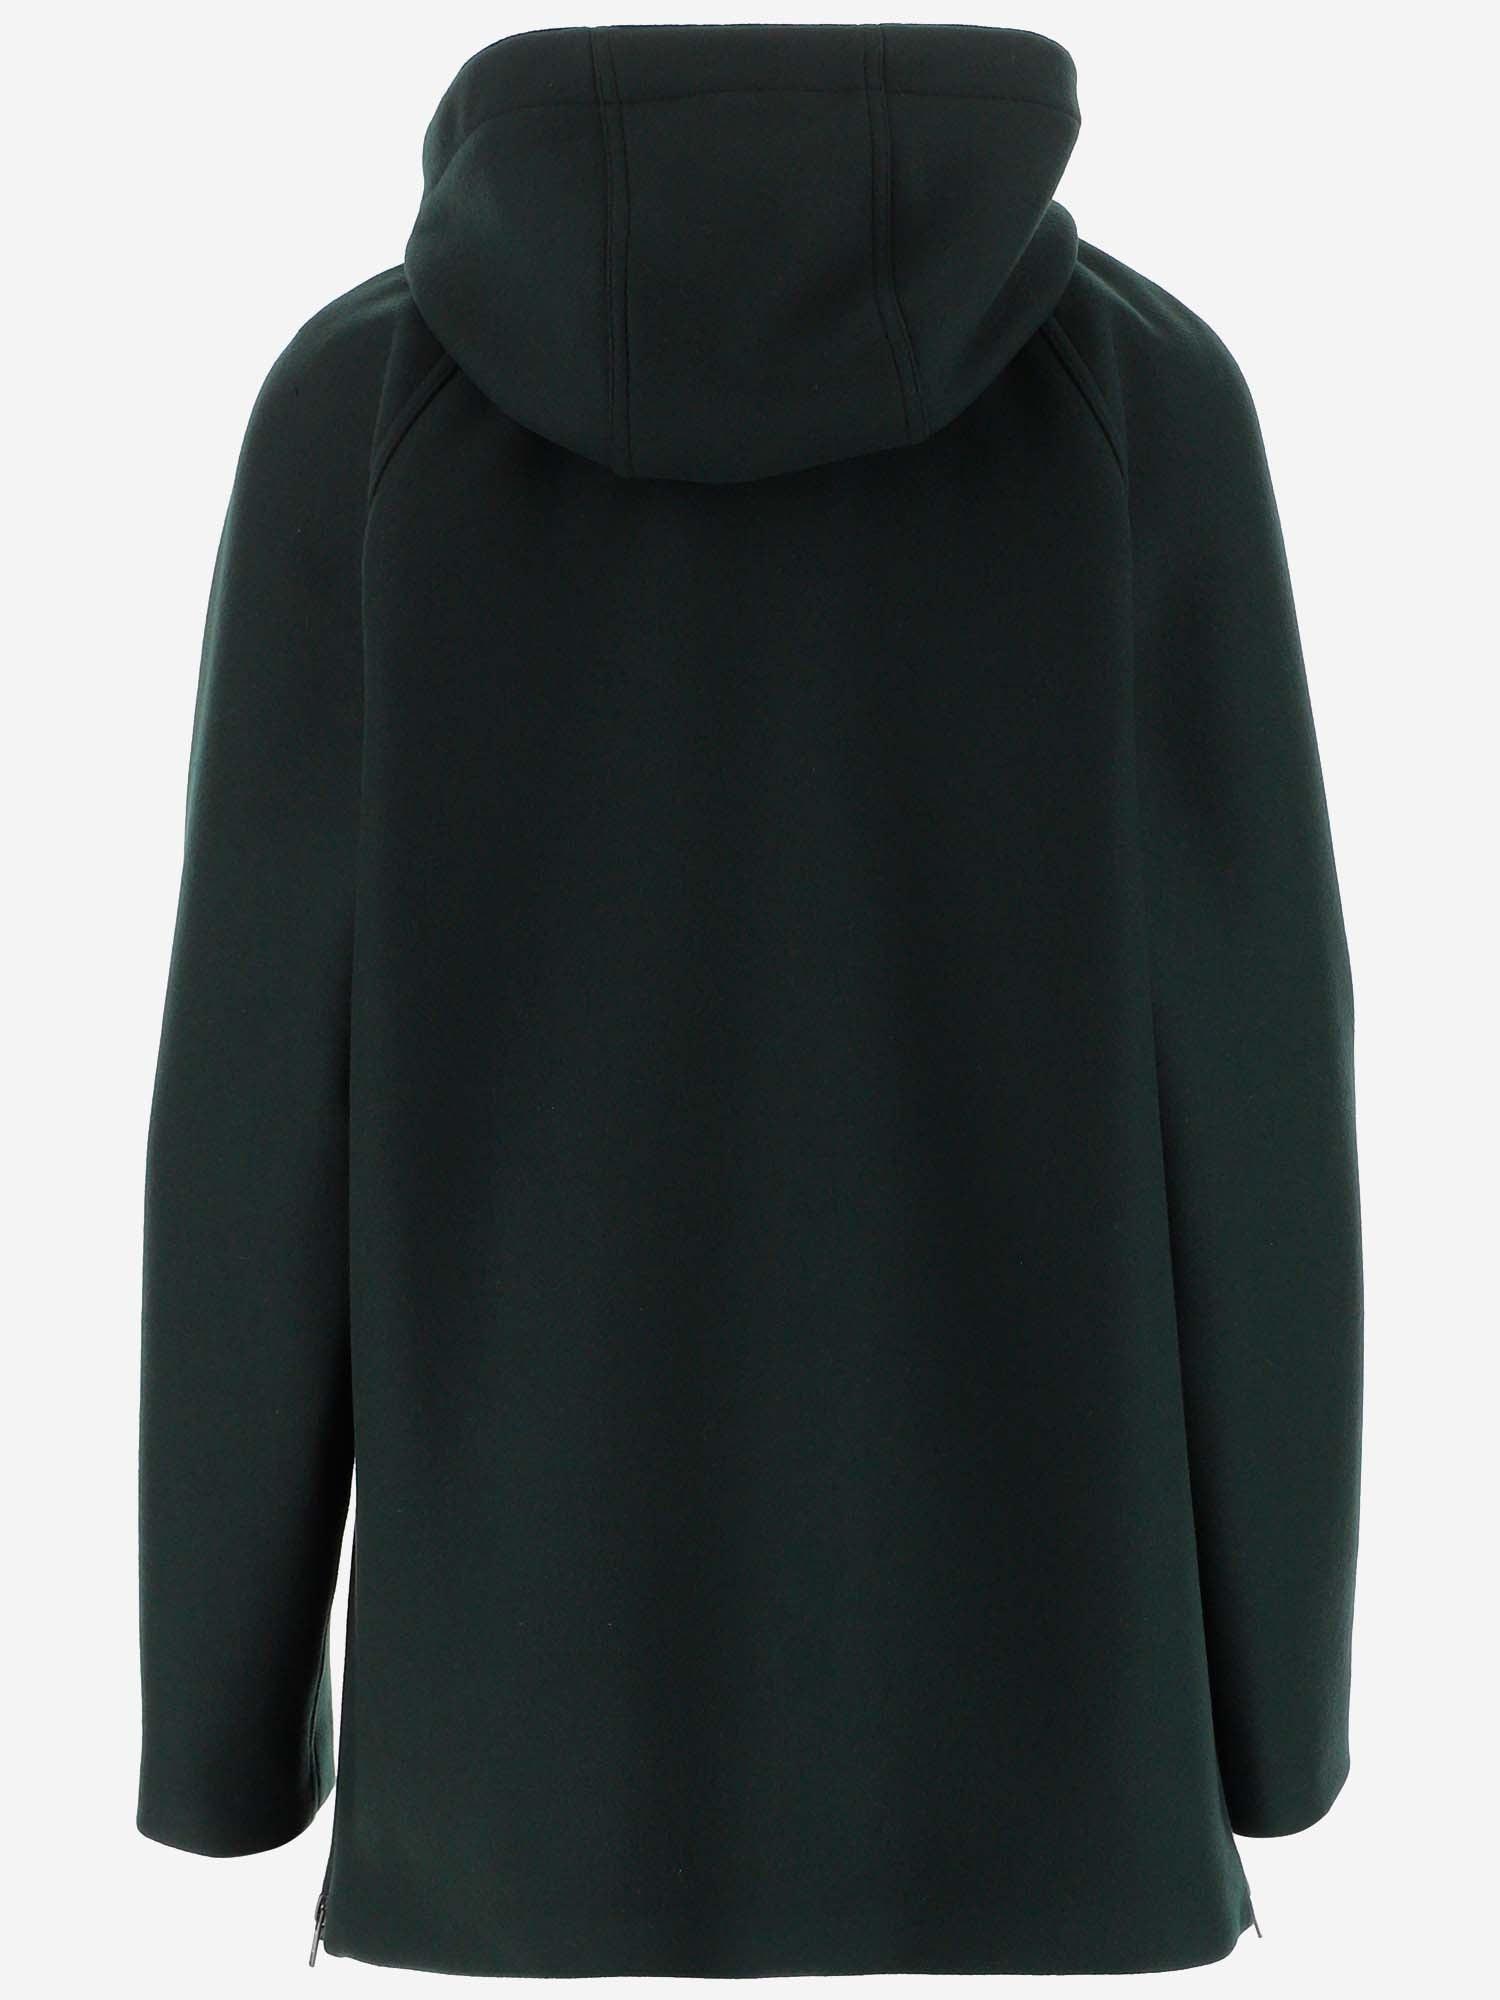 Aspesi Synthetic Coat in Blue,Black - Save 27% Black Womens Coats Aspesi Coats 